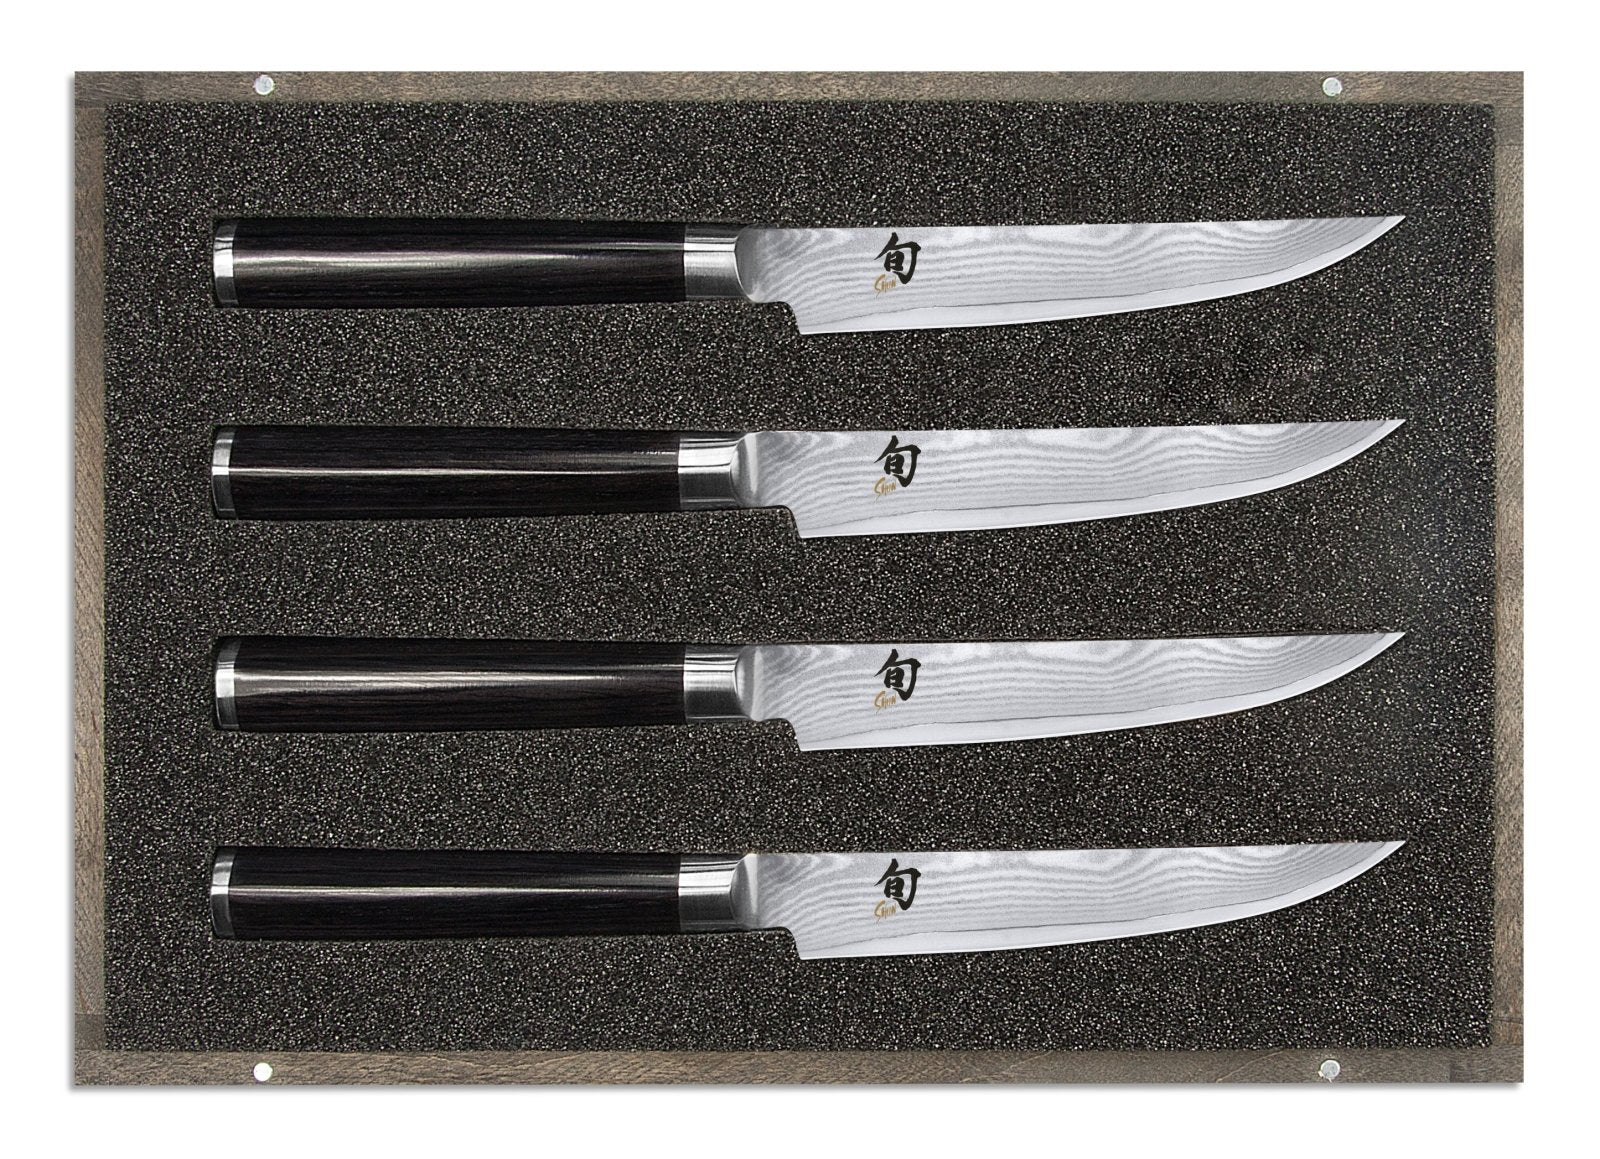 KAI Shun 4 Piece Steak Knife Set - KAI-DMS-400 - The Cotswold Knife Company